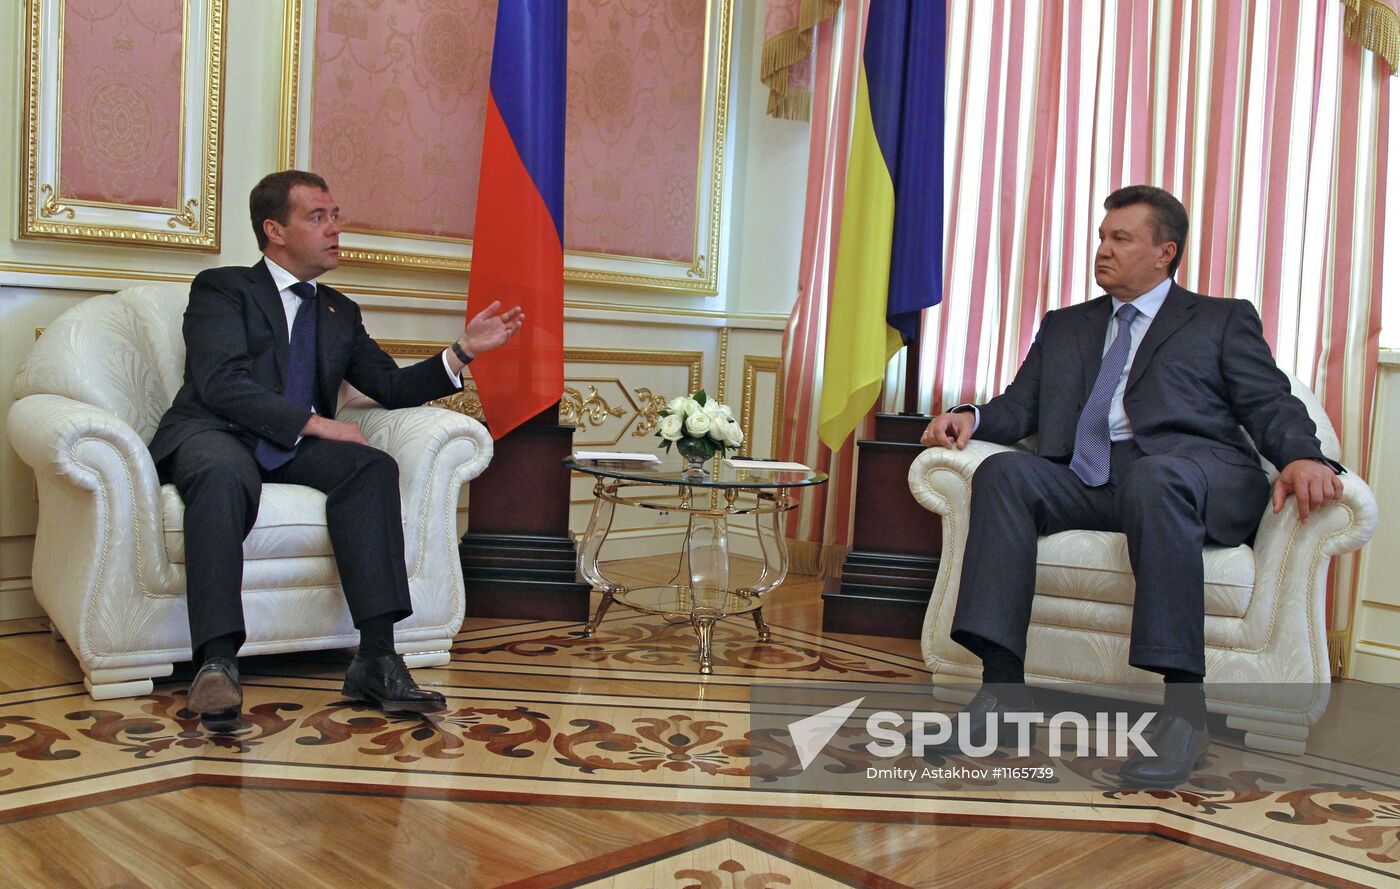 Dmitry Medvedev's working visit to Ukraine